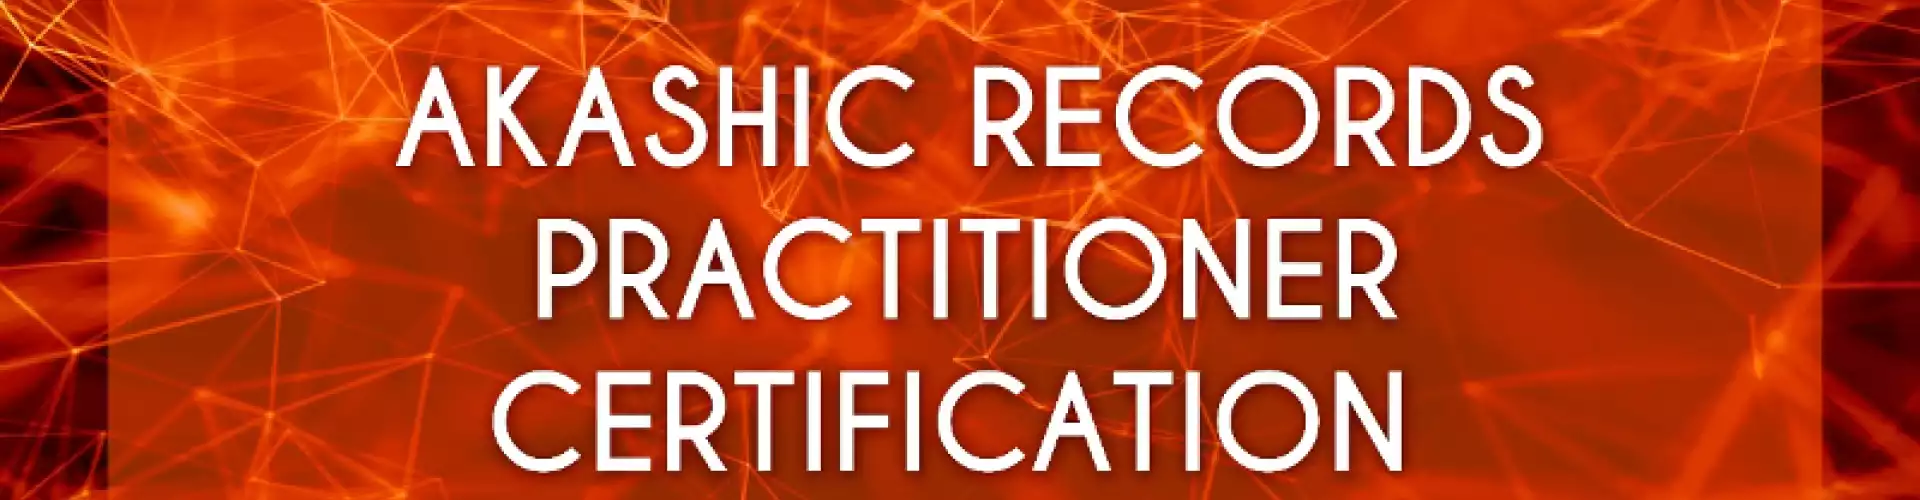 Akashic Records Practitioner Certification - November 19-21, 2020 - Amy Mak